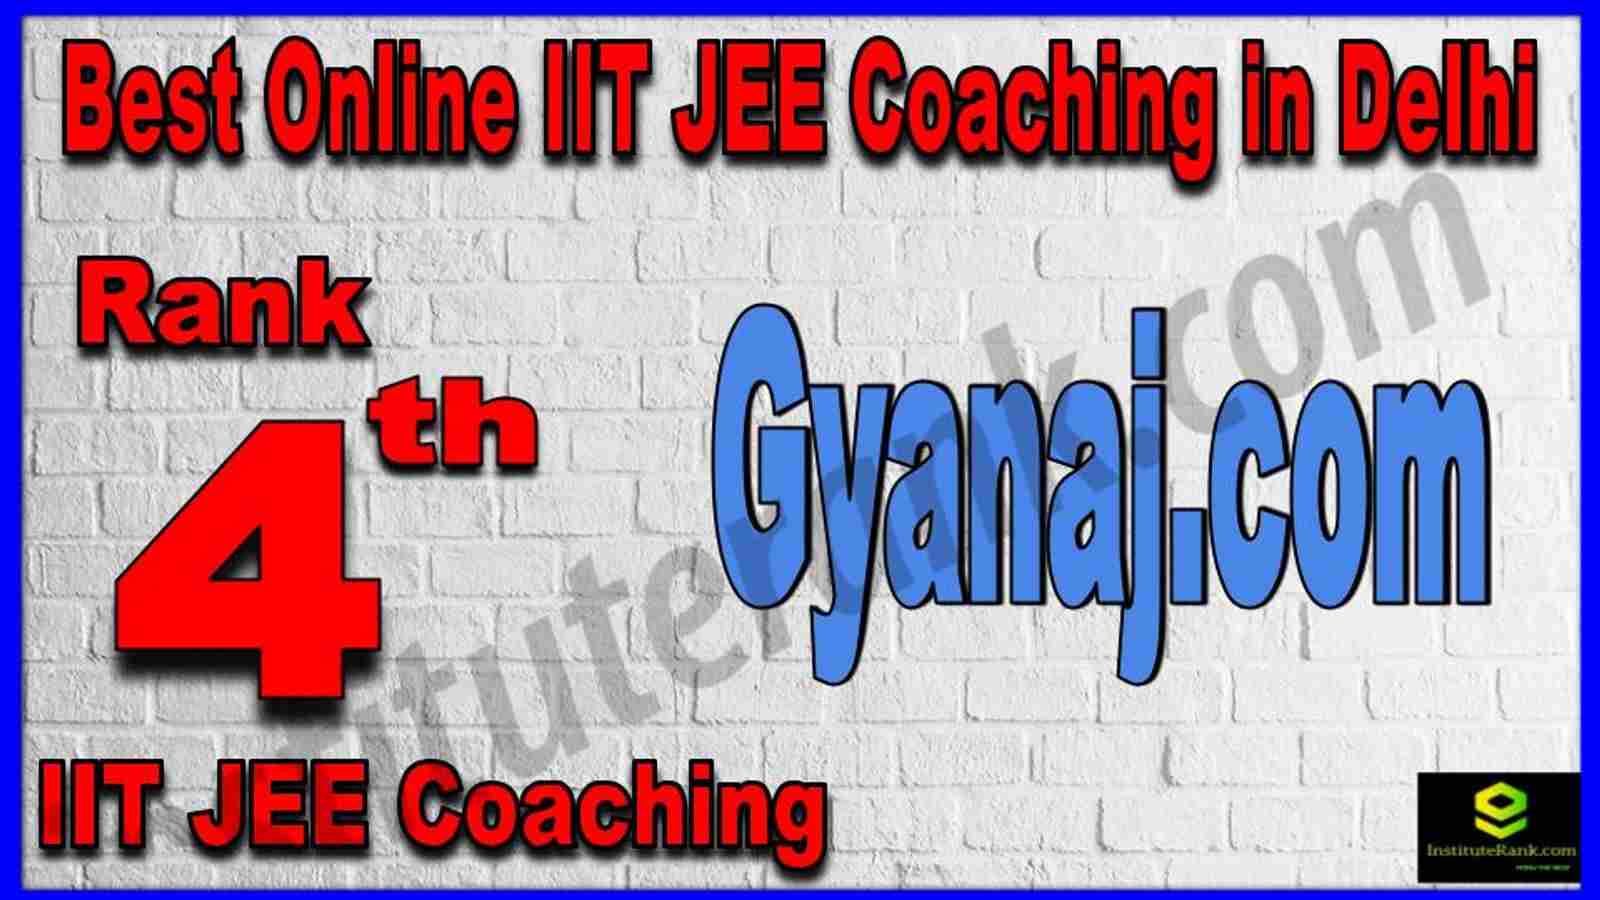 Rank 4th Best Online IIT JEE Coaching in Delhi